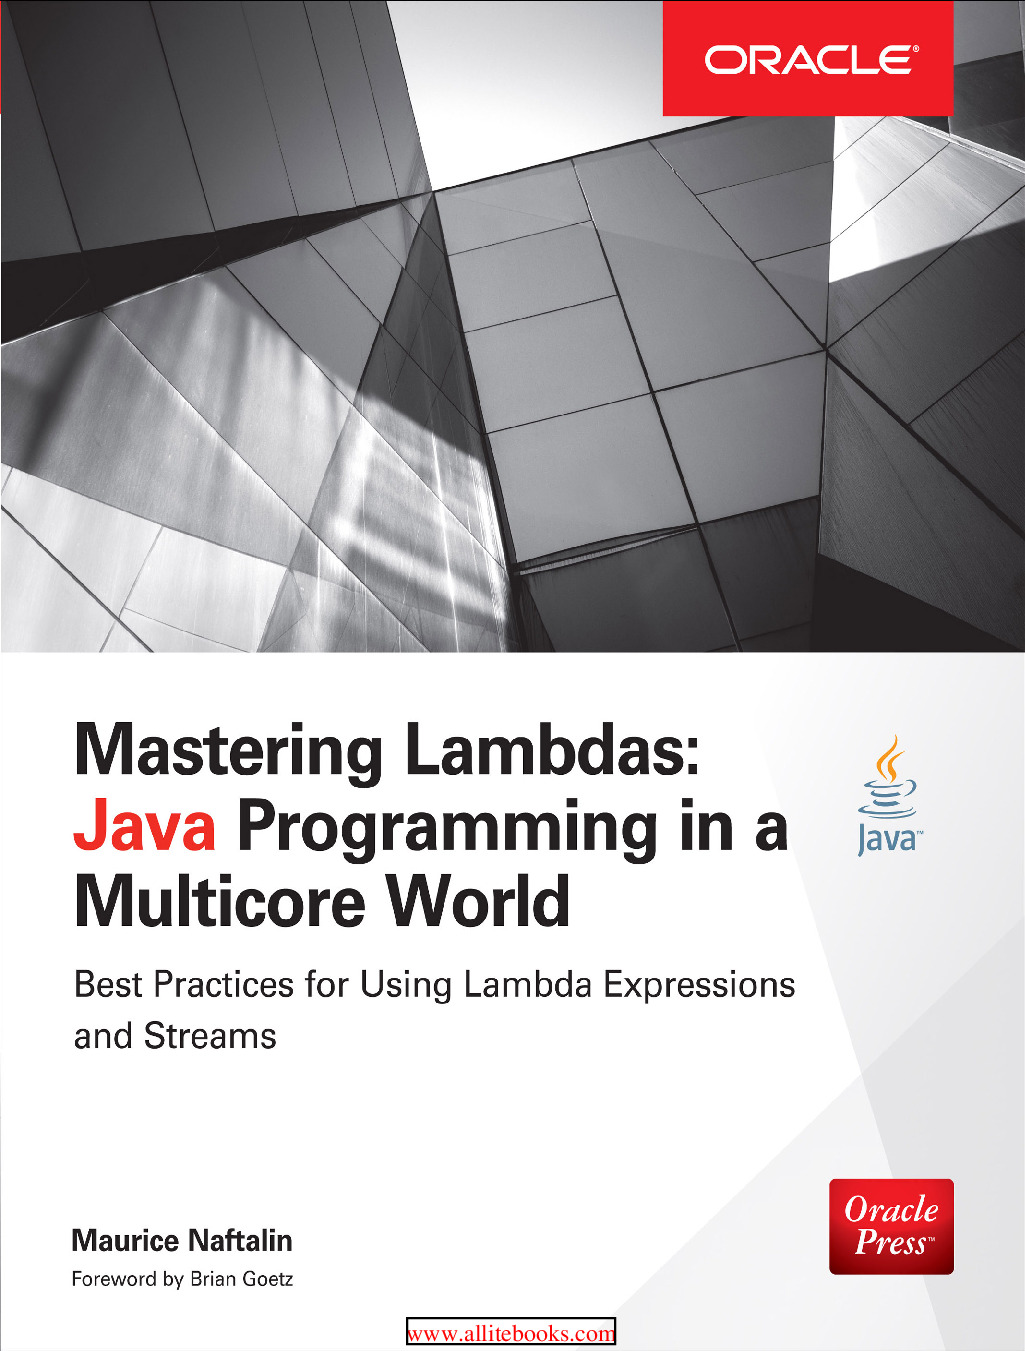 Mastering Lambdas- Java Programming in a Multicore World